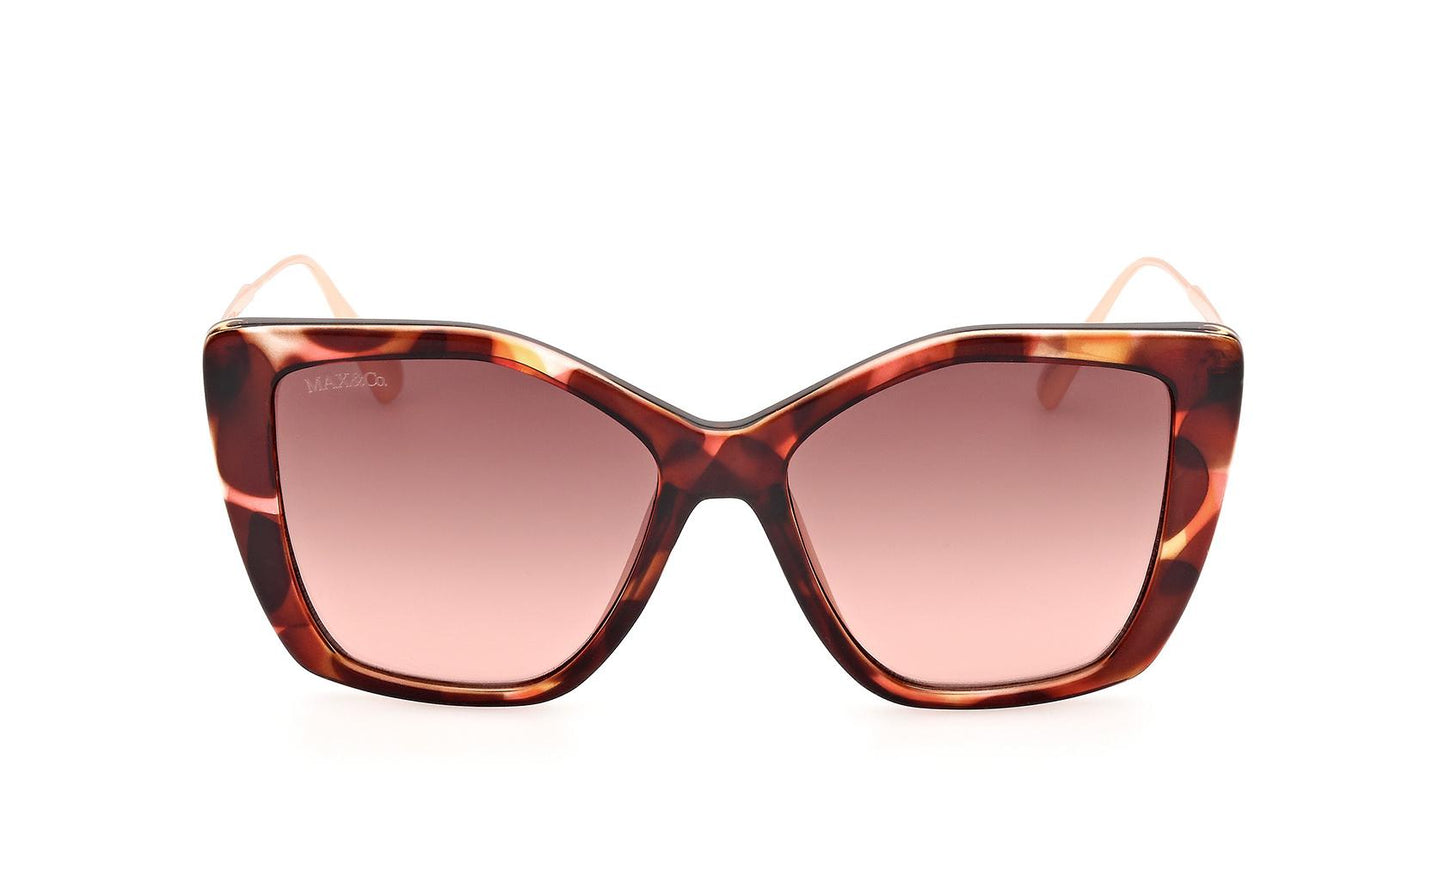 Max&Co Sunglasses MO0065 55F